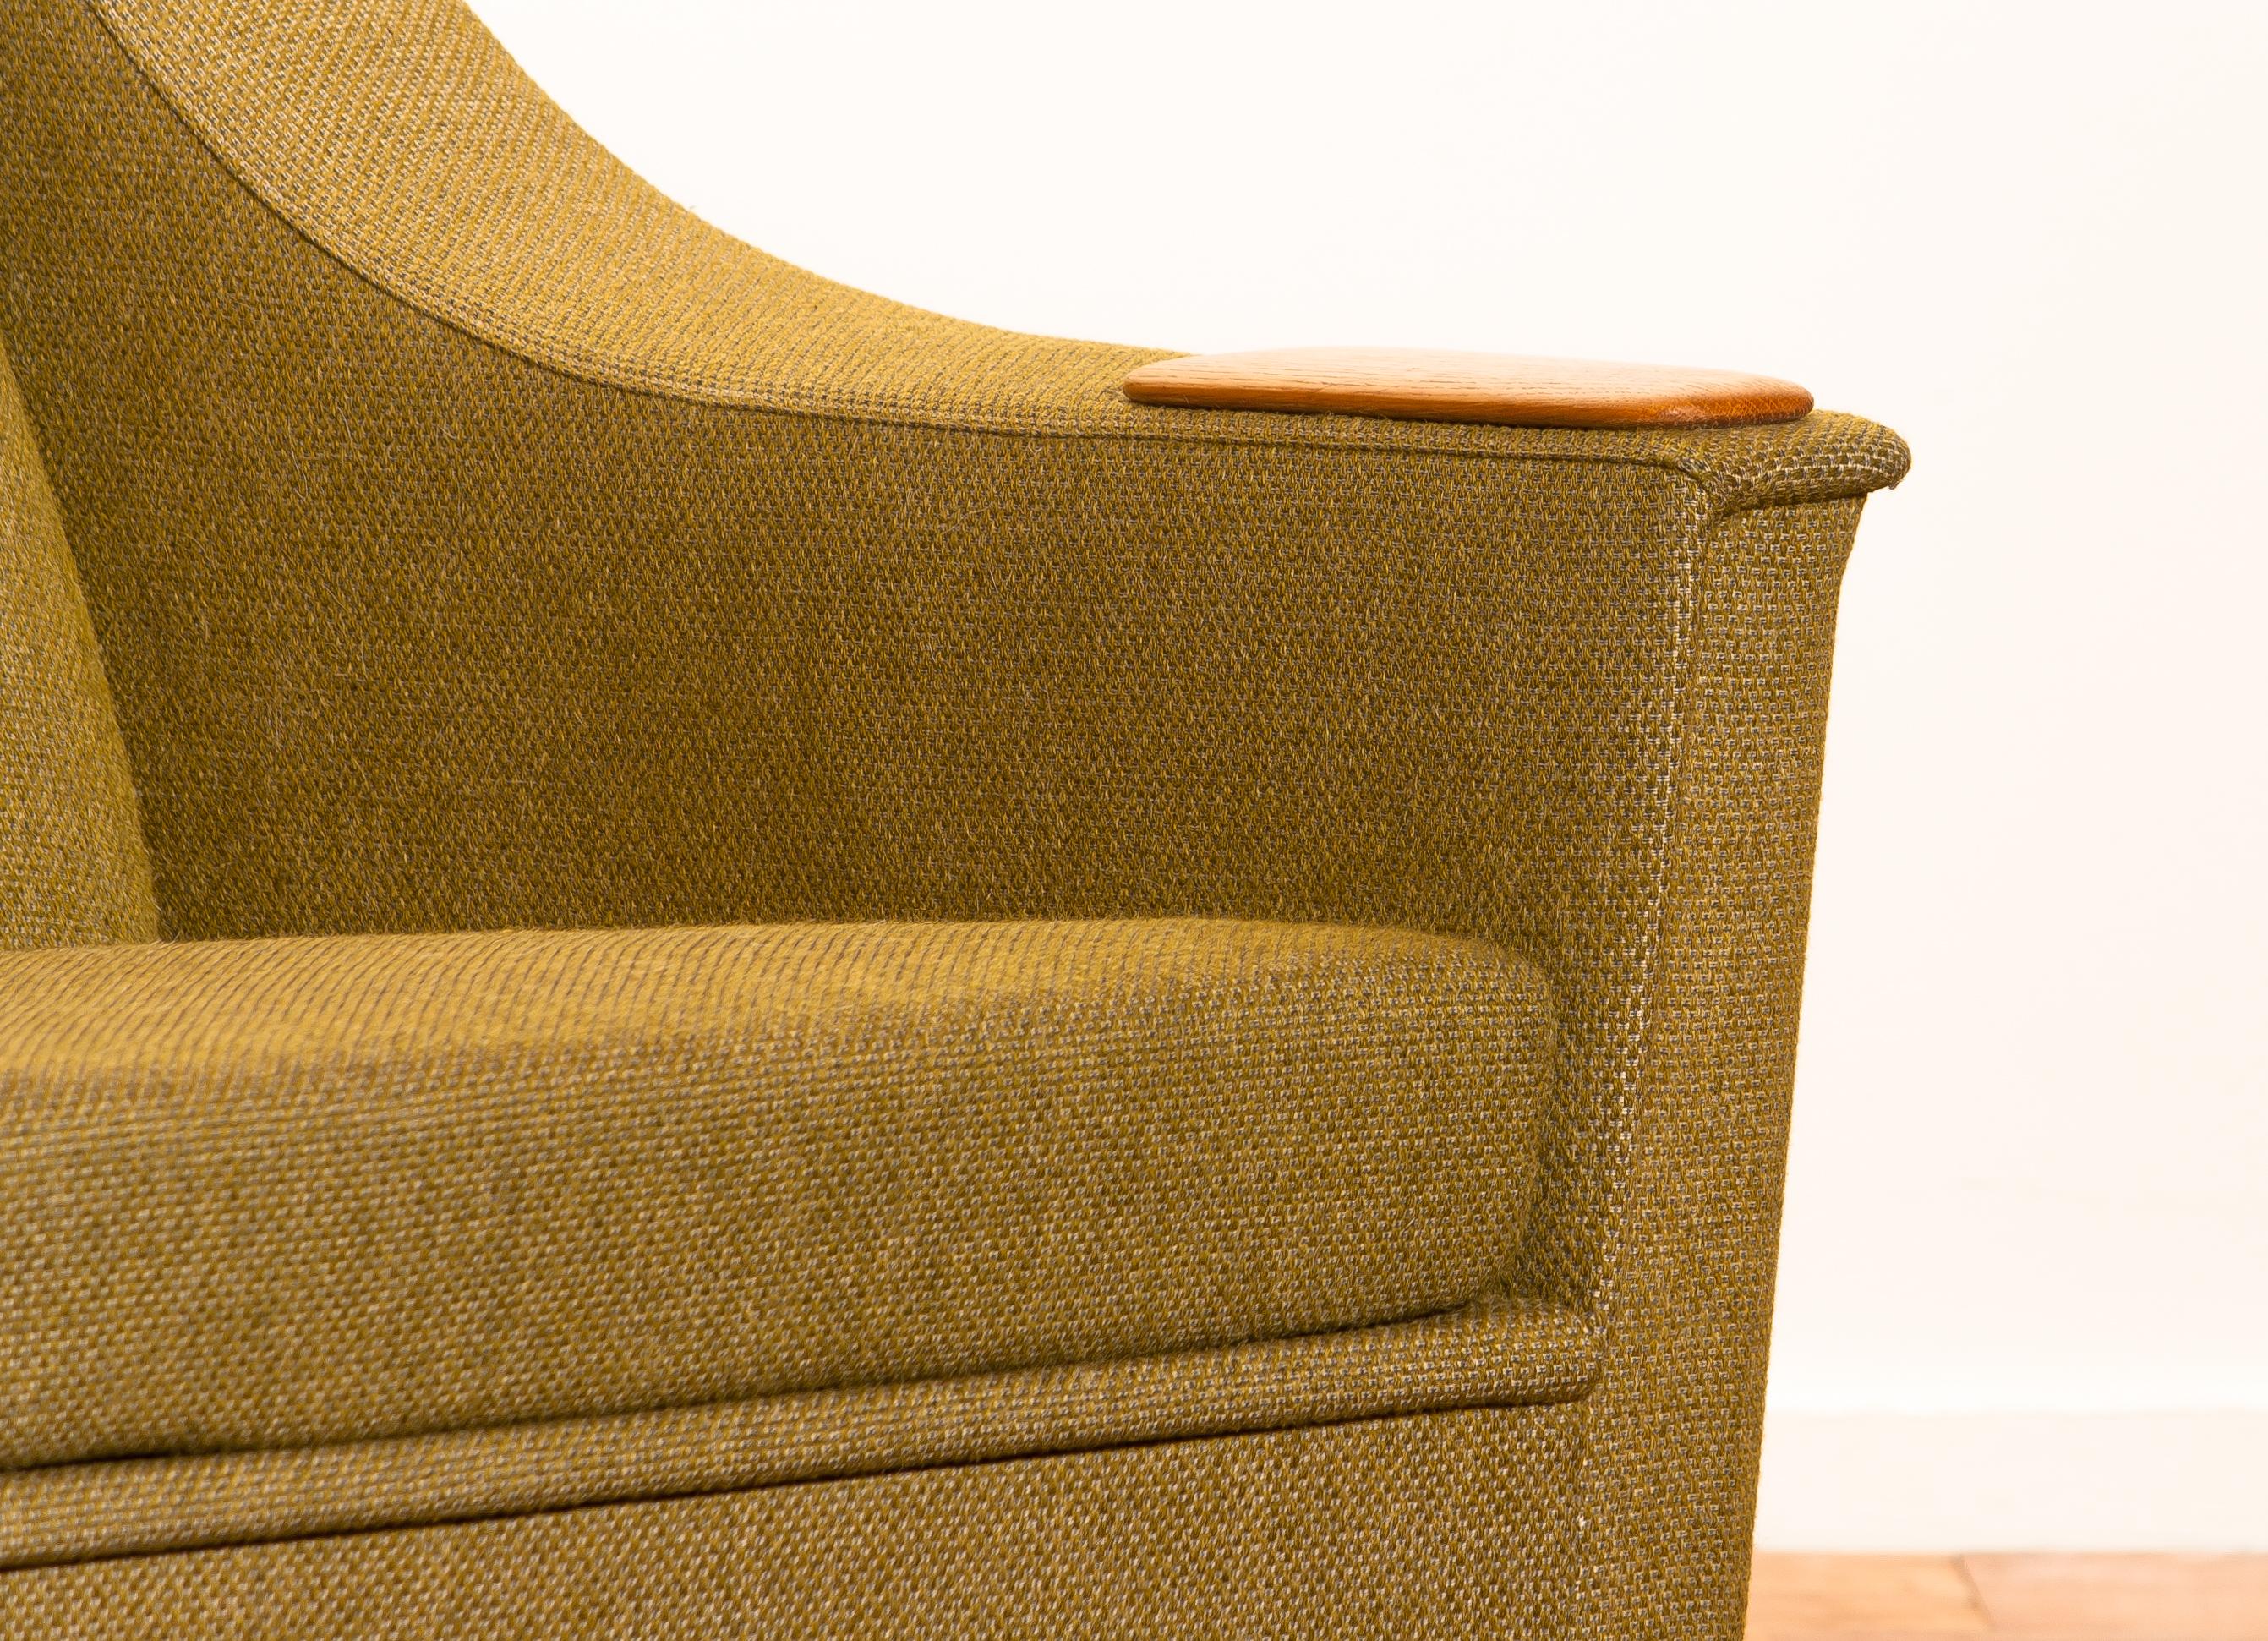 Swedish 1960s, Oak Green Upholstered Lounge Chair by Folke Ohlsson for DUX, Sweden